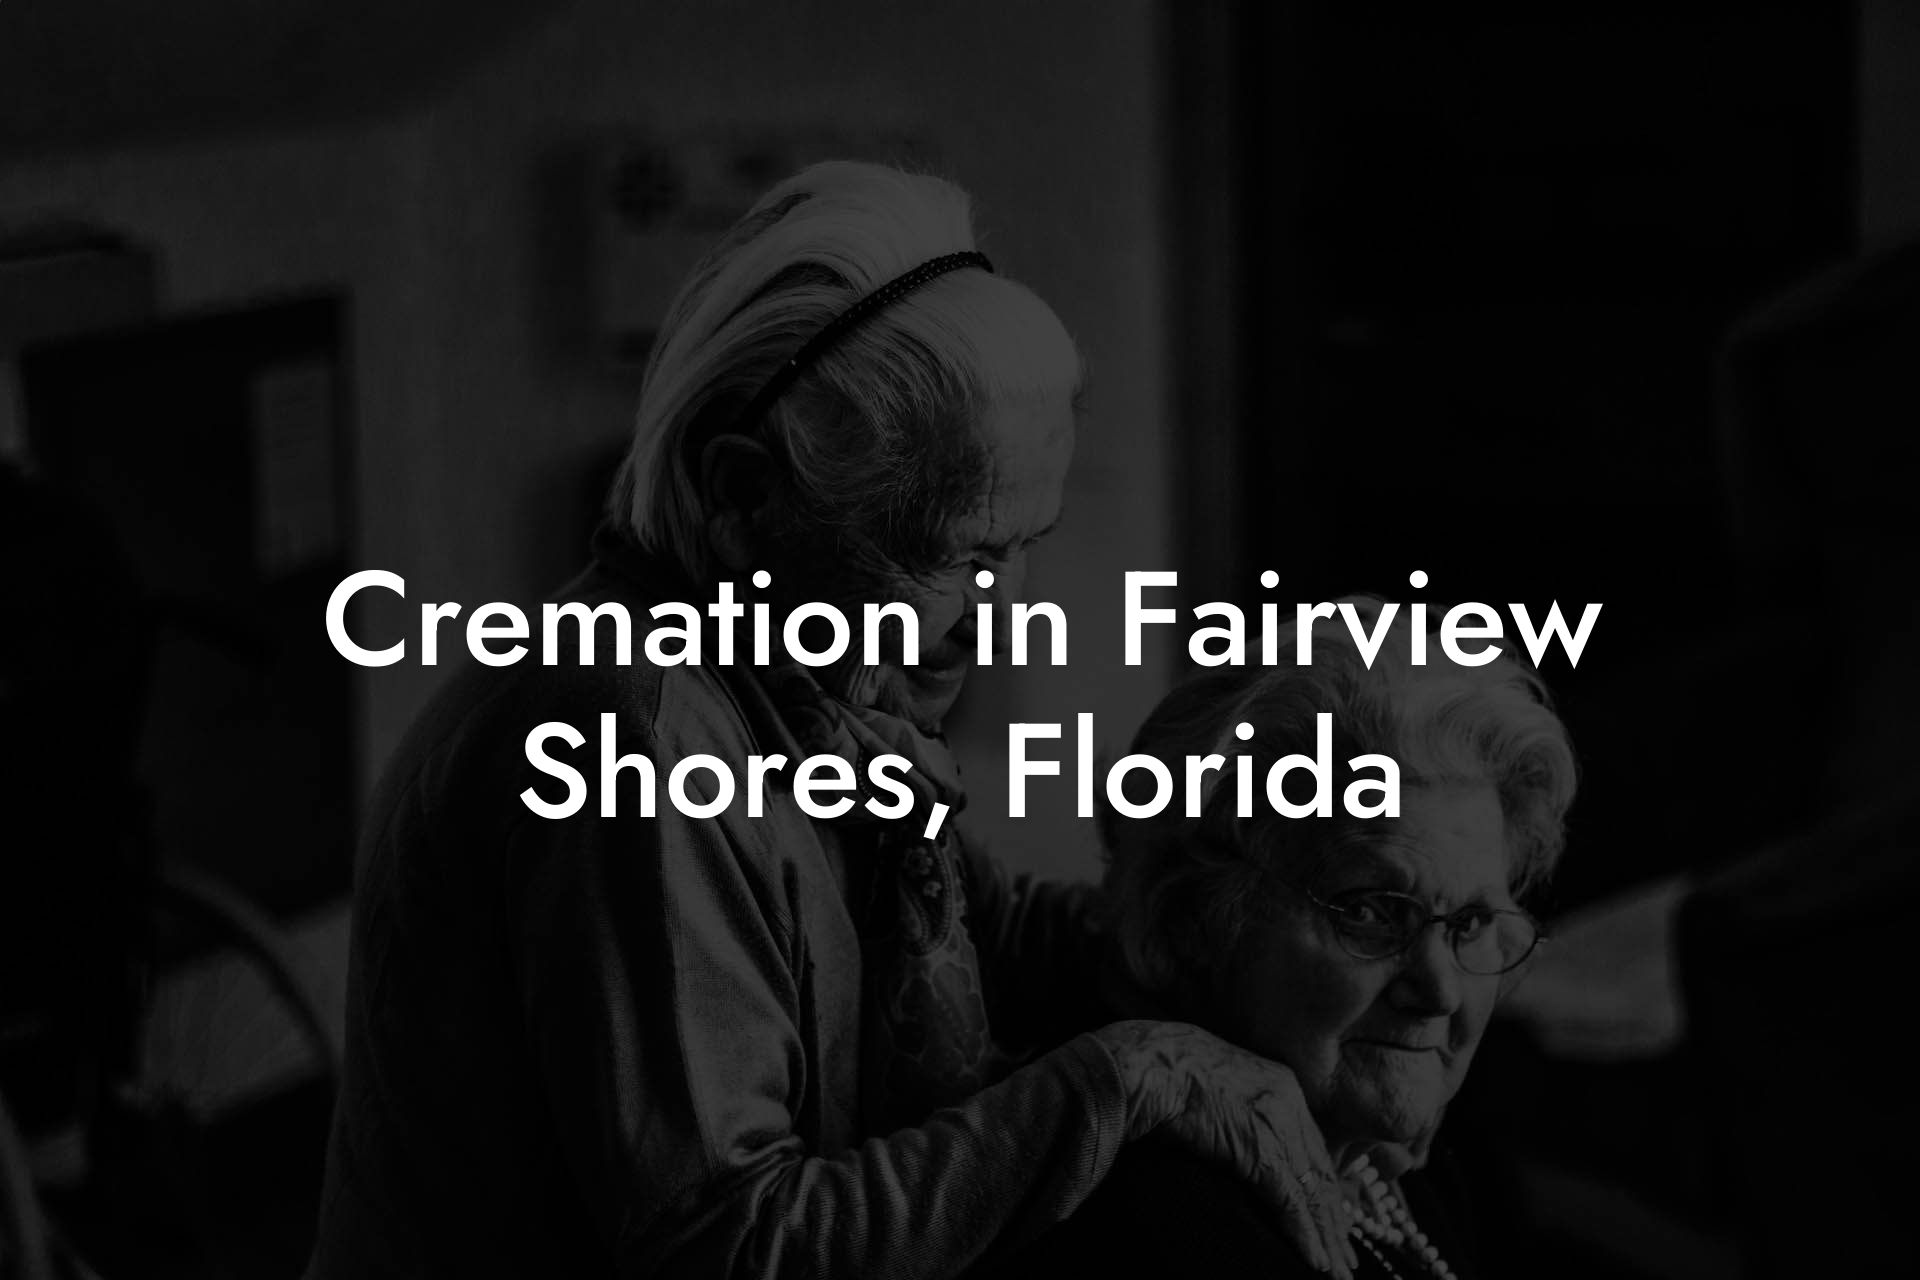 Cremation in Fairview Shores, Florida